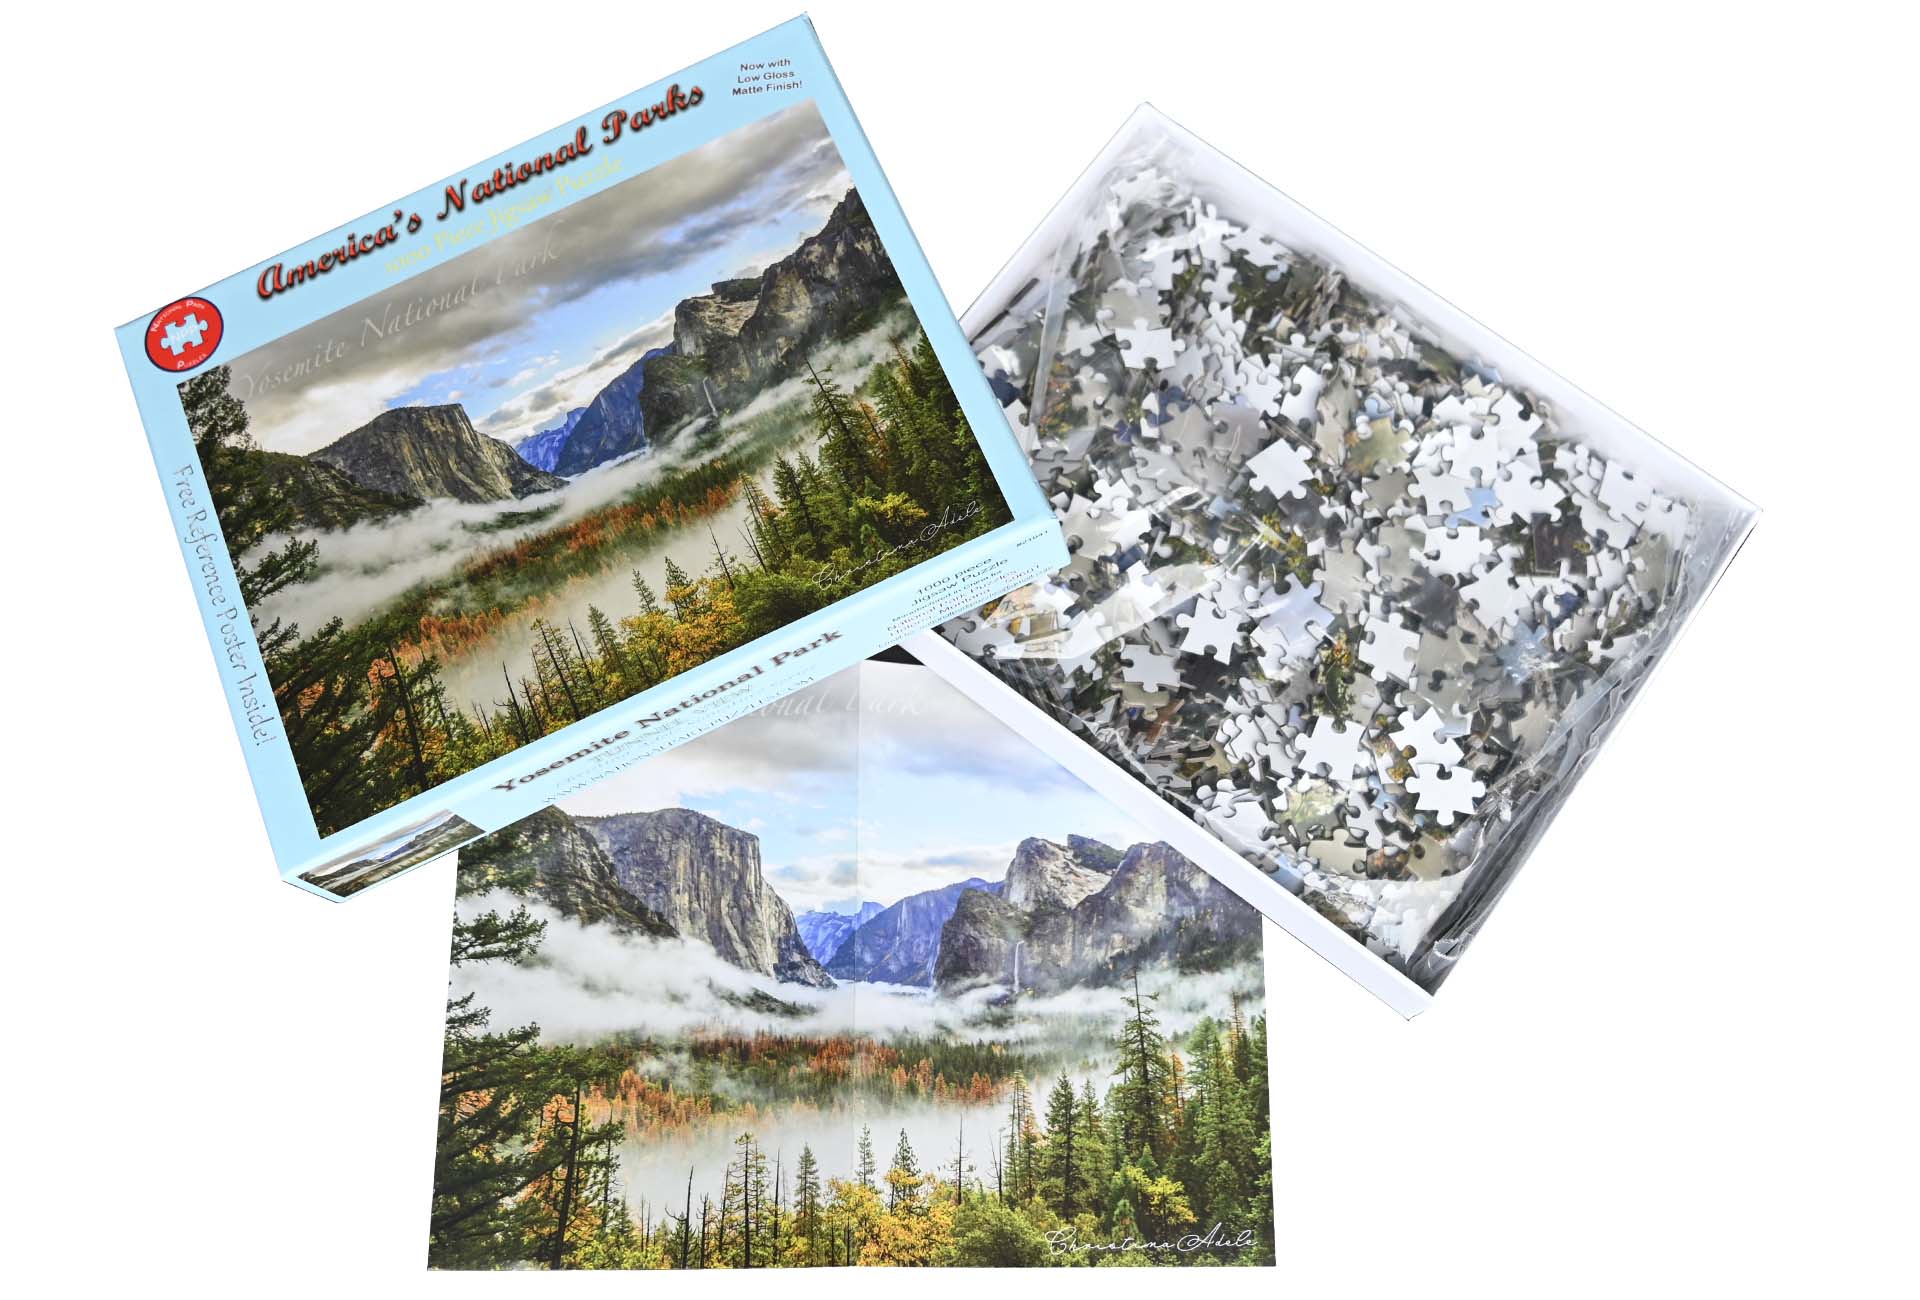 Yosemite – 1000 Piece Jigsaw Puzzle – Education Outdoors